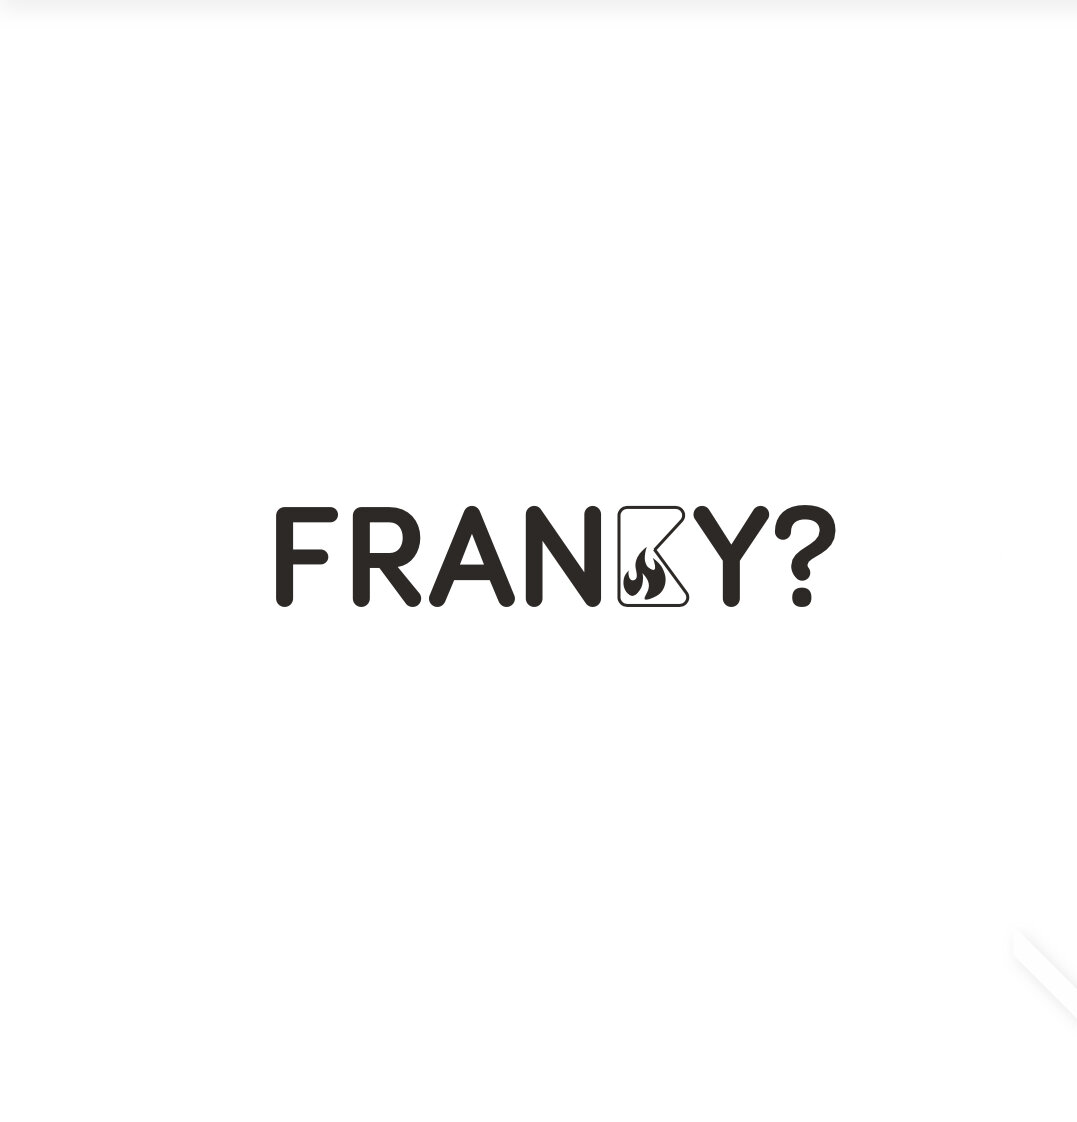 Franky?